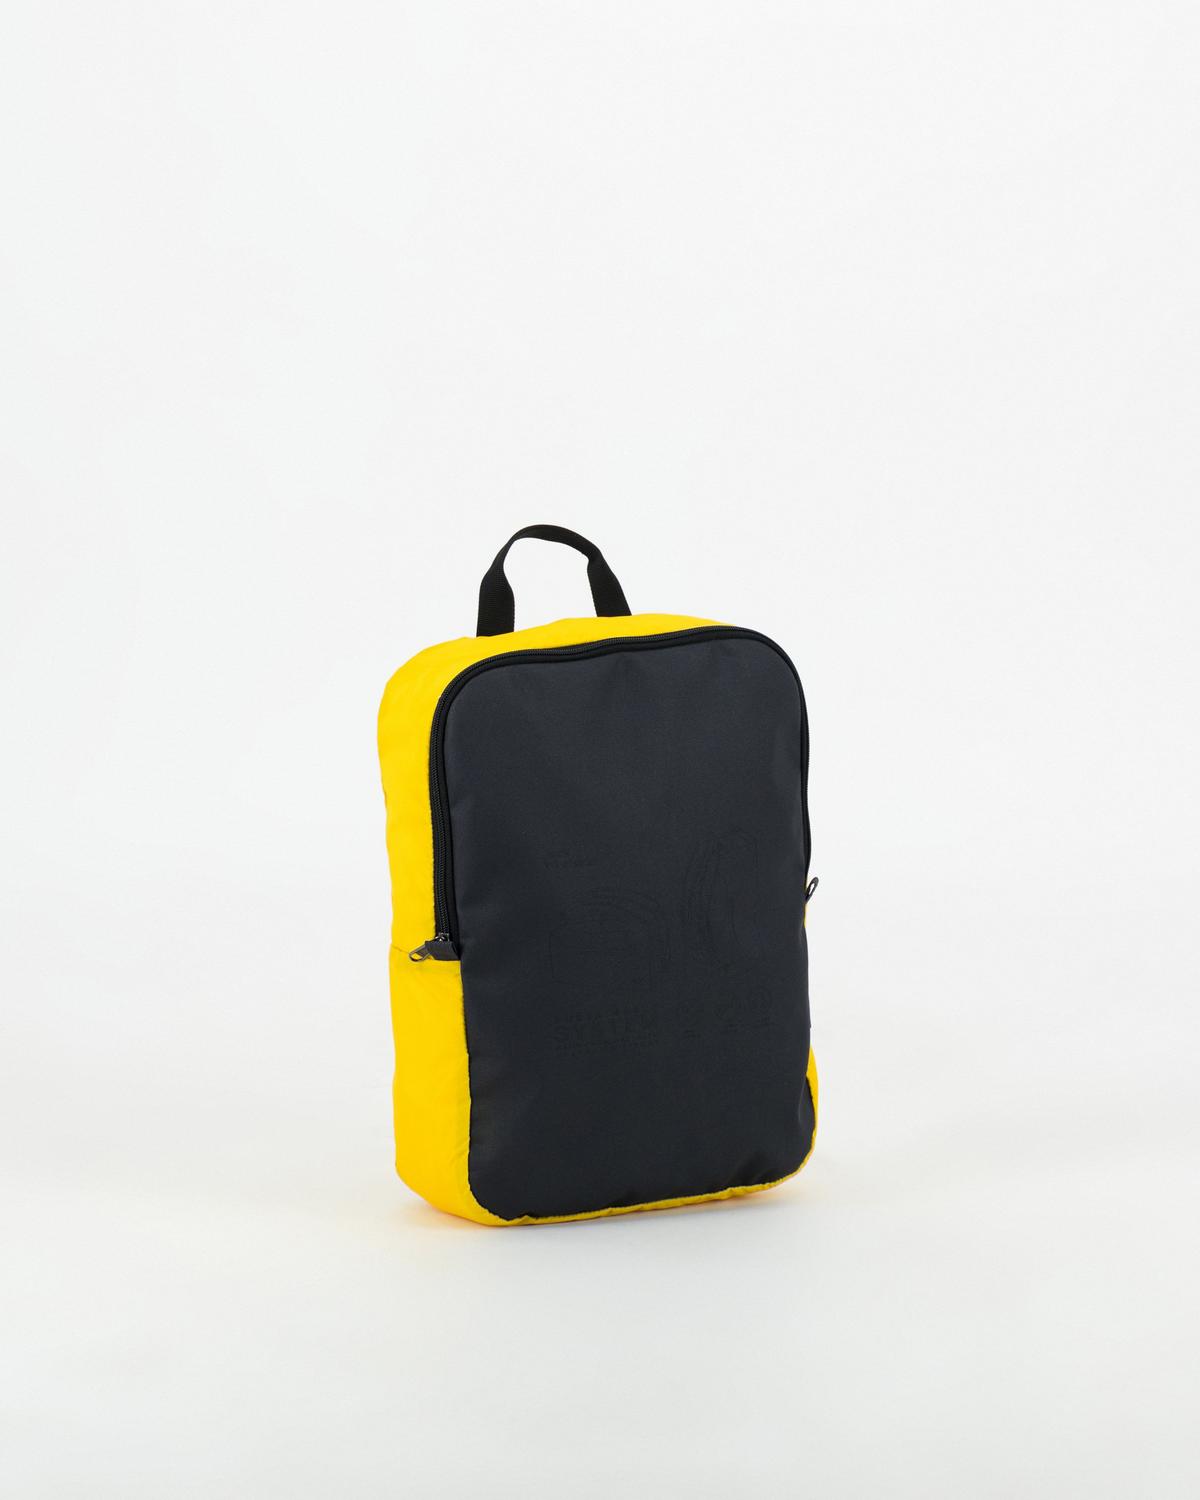 Jack Wolfskin Traveltopia 45L Duffel Bag -  Charcoal